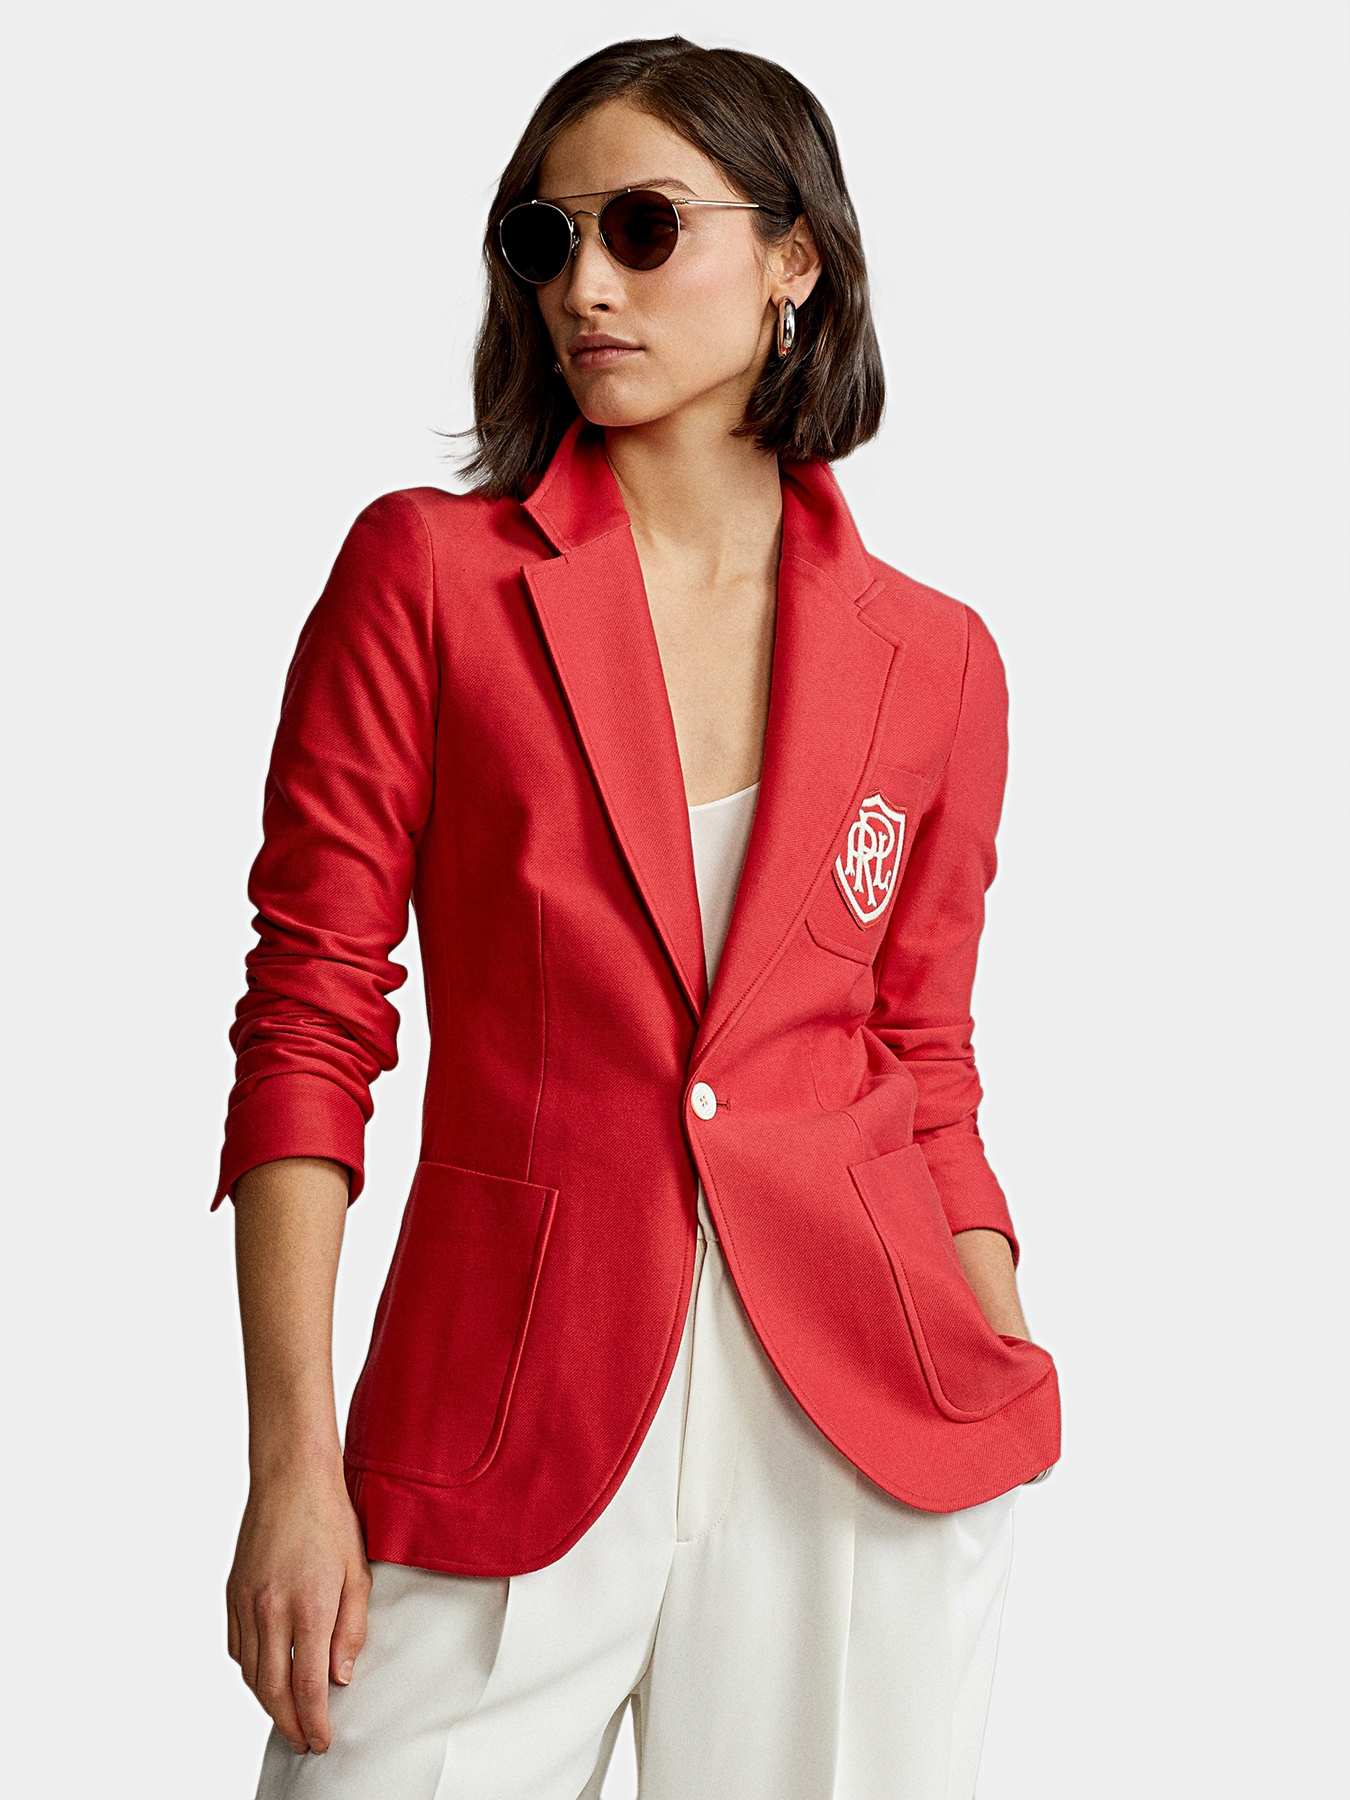 Red blazer with logo emblem brand POLO RALPH LAUREN —  /en